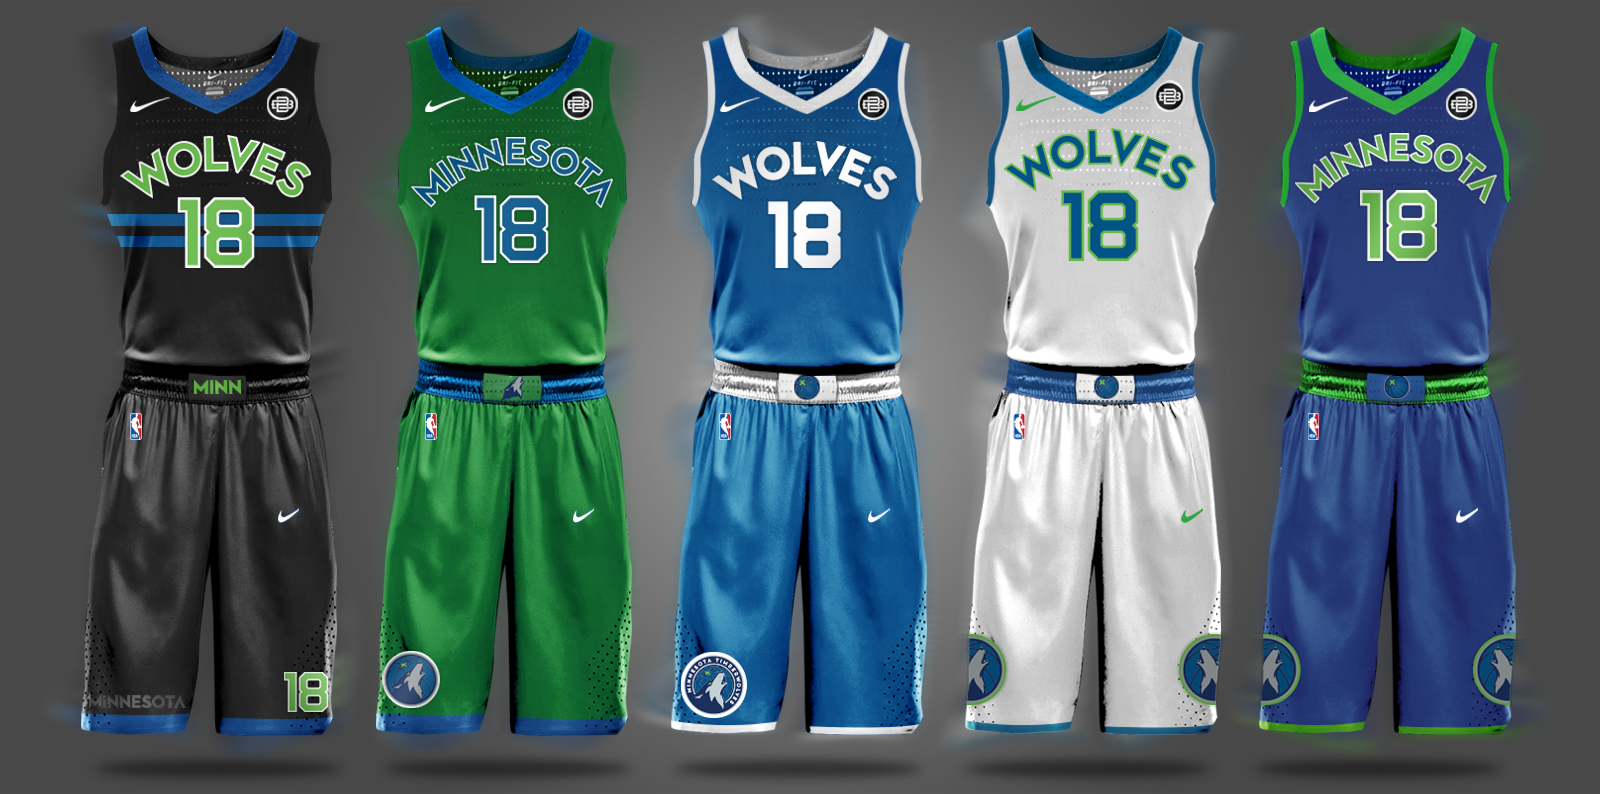 Minnesota-Timberwolves-Nike-Uniforms.png